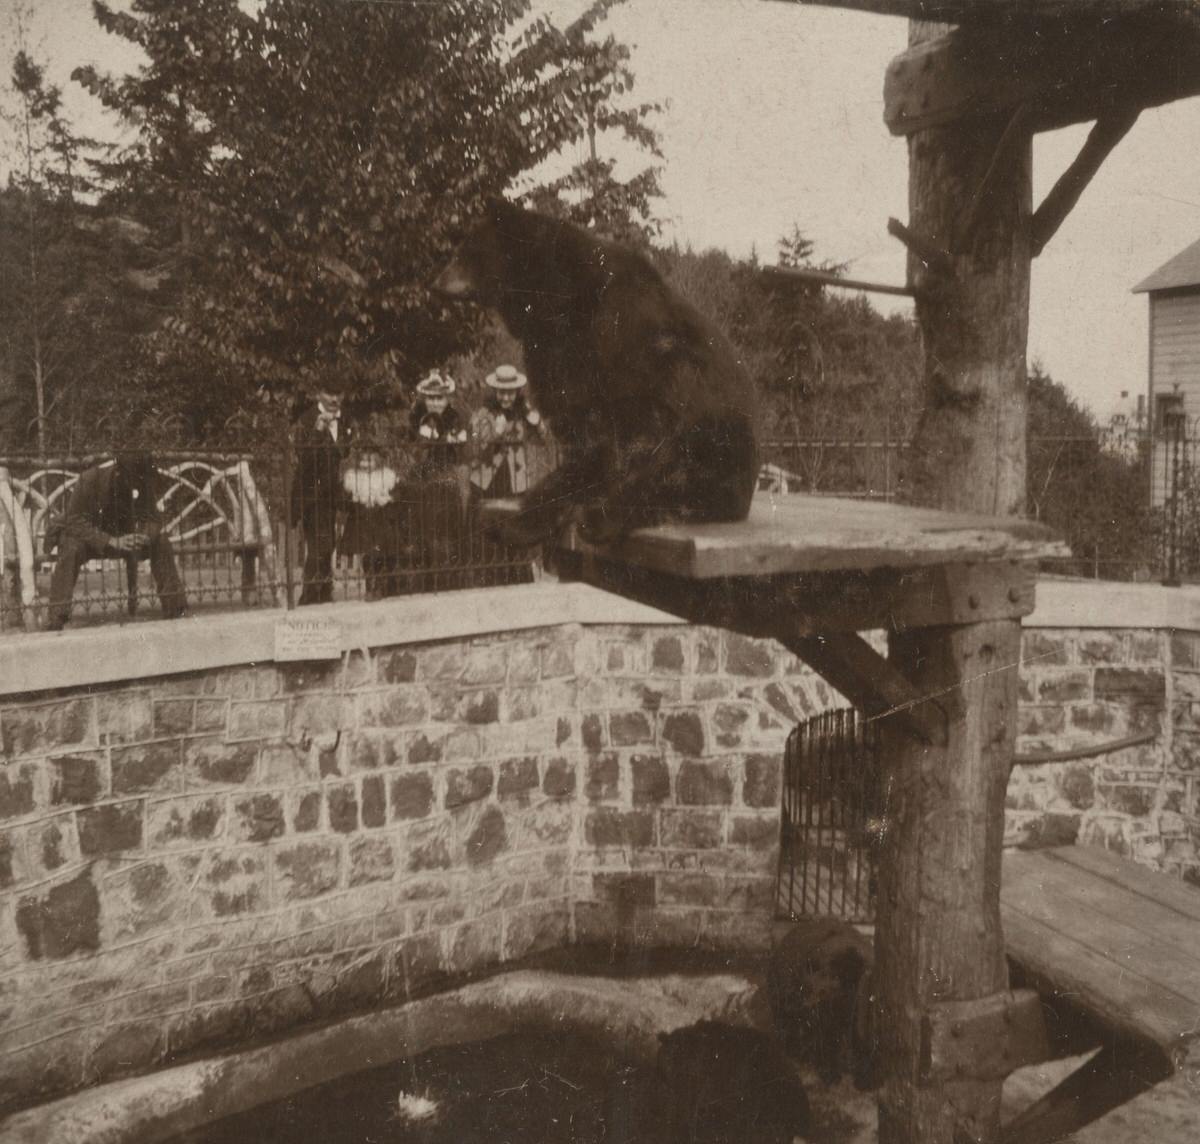 Washington Park Zoo, 1900